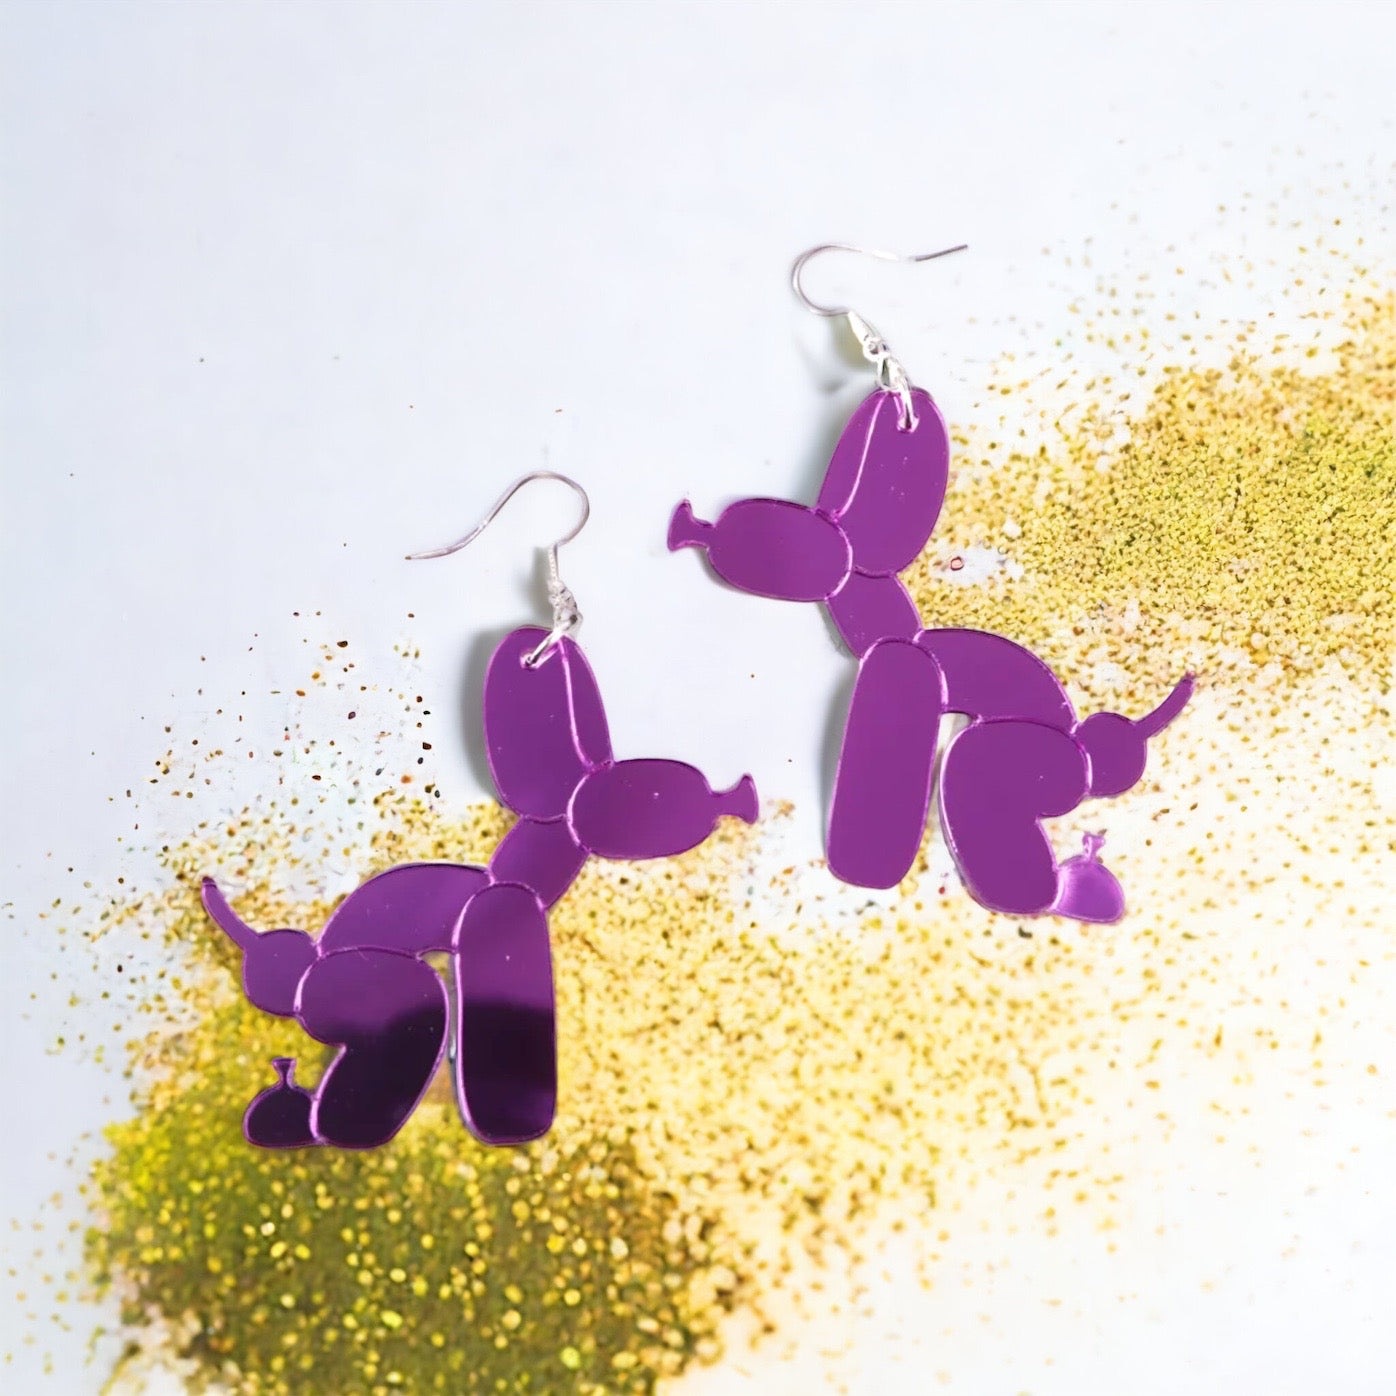 Balloon Dog Earrings - Handmade Jewelry, Mardi Gras Earrings, Pooping Balloon Dog, Handmade Earrings, Funny Gift, Funky Jewelry